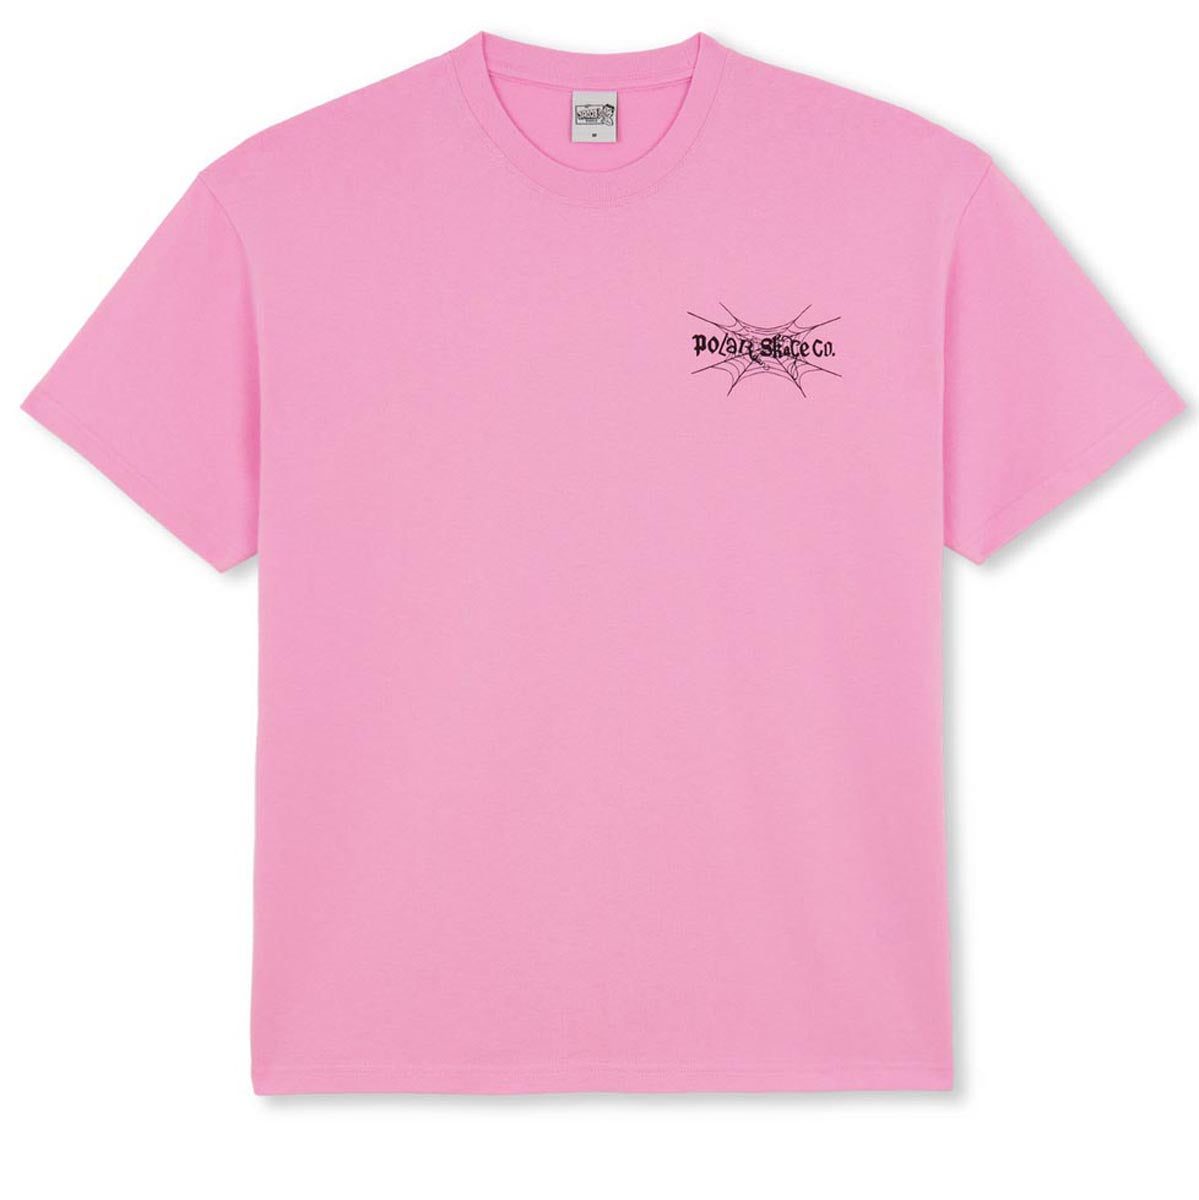 Polar Spiderweb T-Shirt - Pink image 1